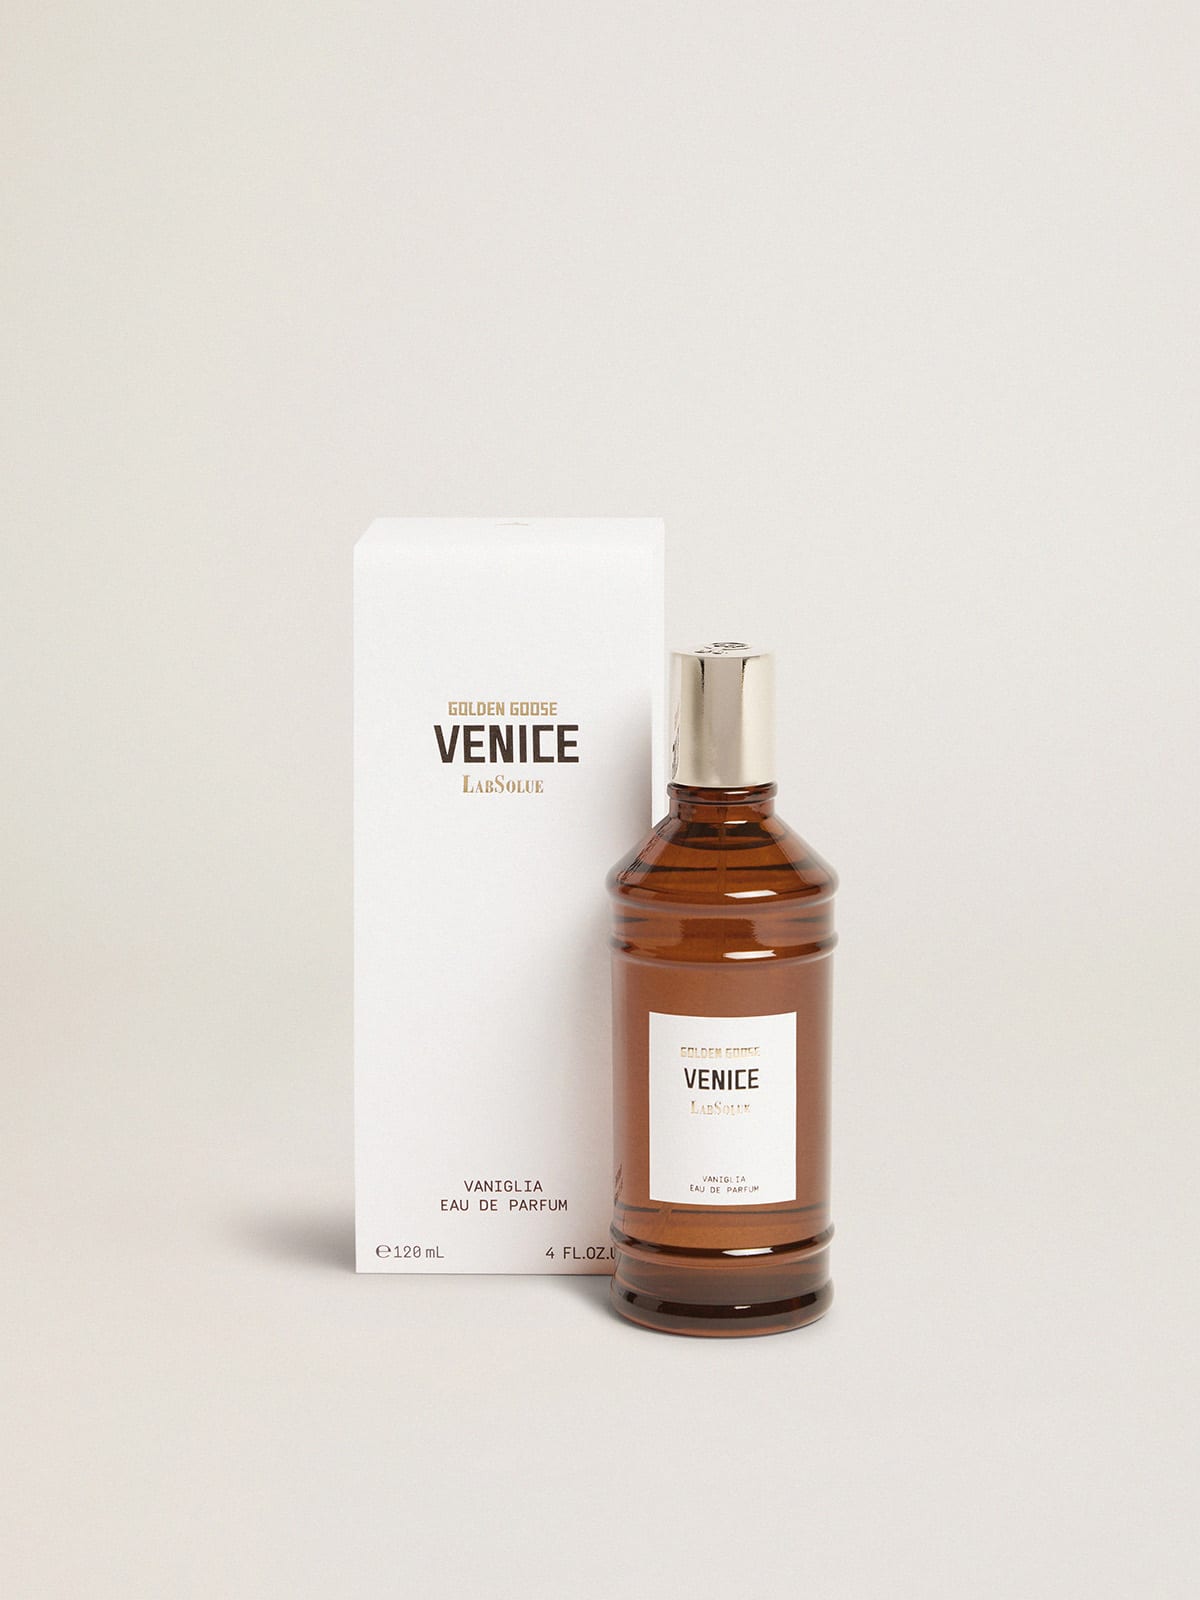 Golden Goose - Venice Essence Vanilla Eau de Parfum 120 ml in 